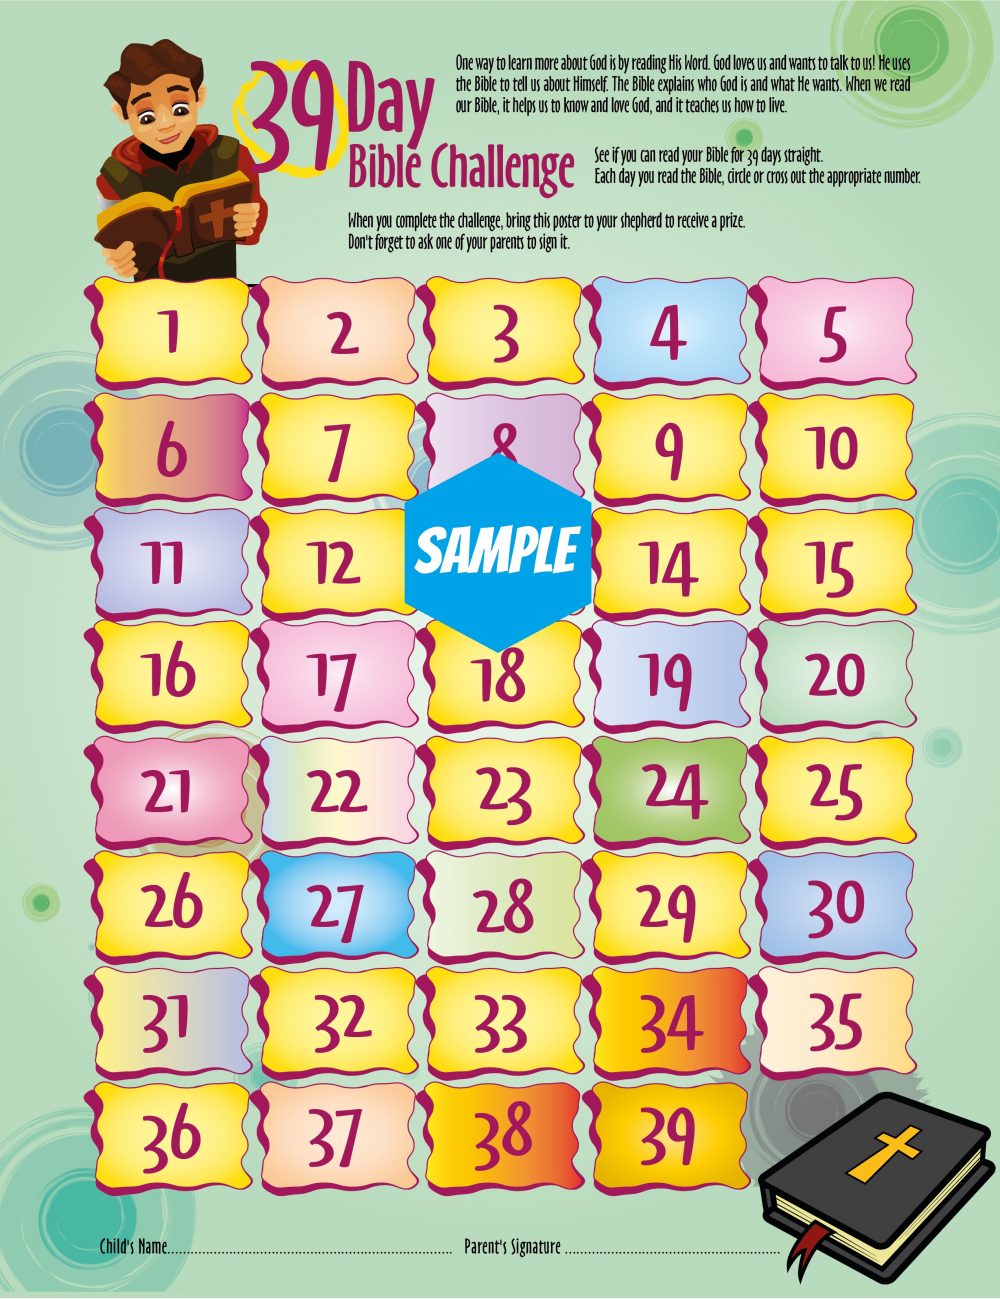 39Day Bible Challenge for Kids Deeper KidMin